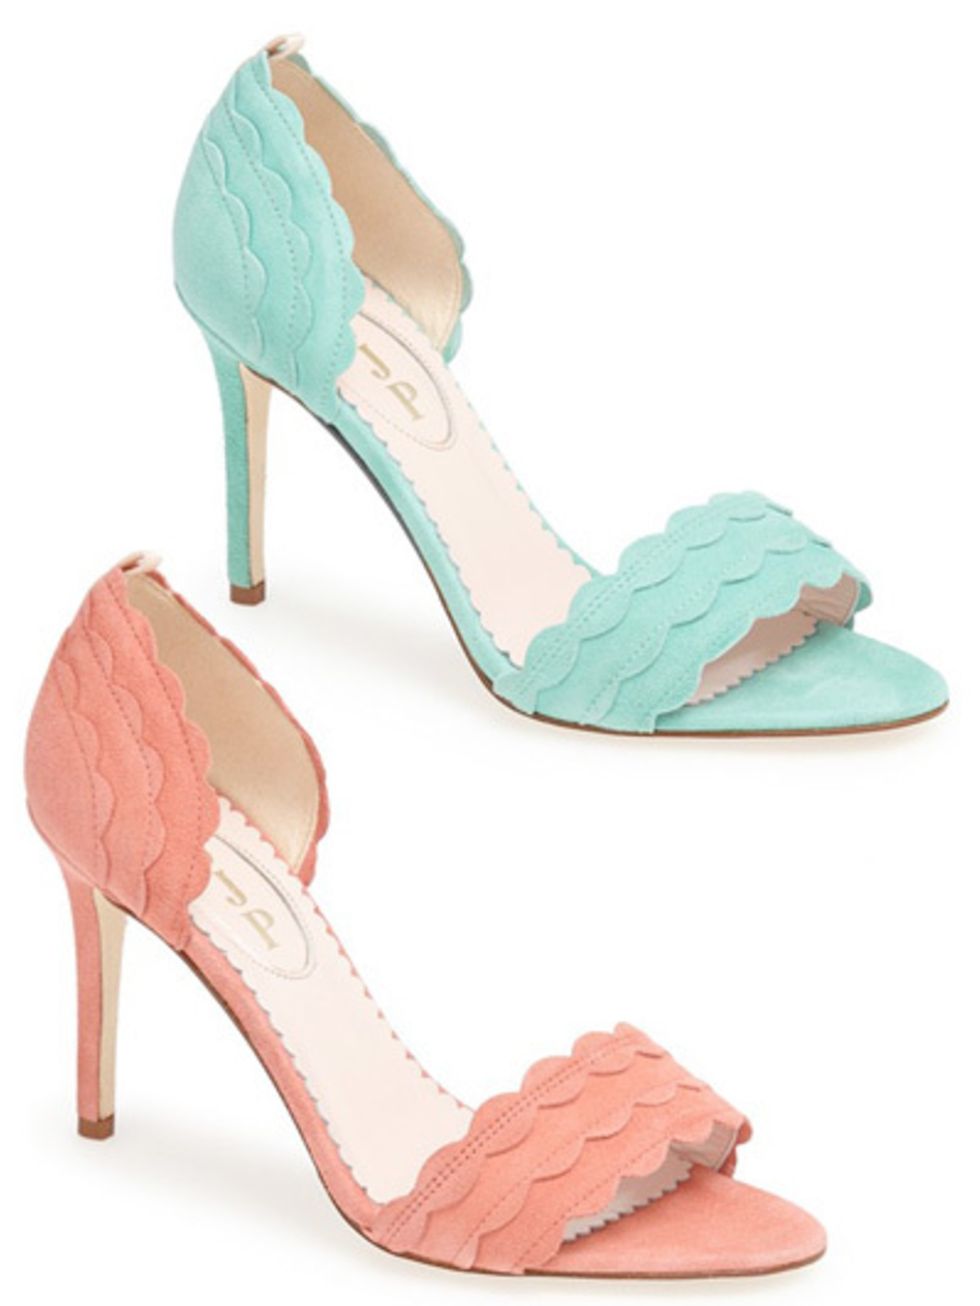 Footwear, Product, High heels, Pink, Sandal, Teal, Aqua, Turquoise, Basic pump, Tan, 